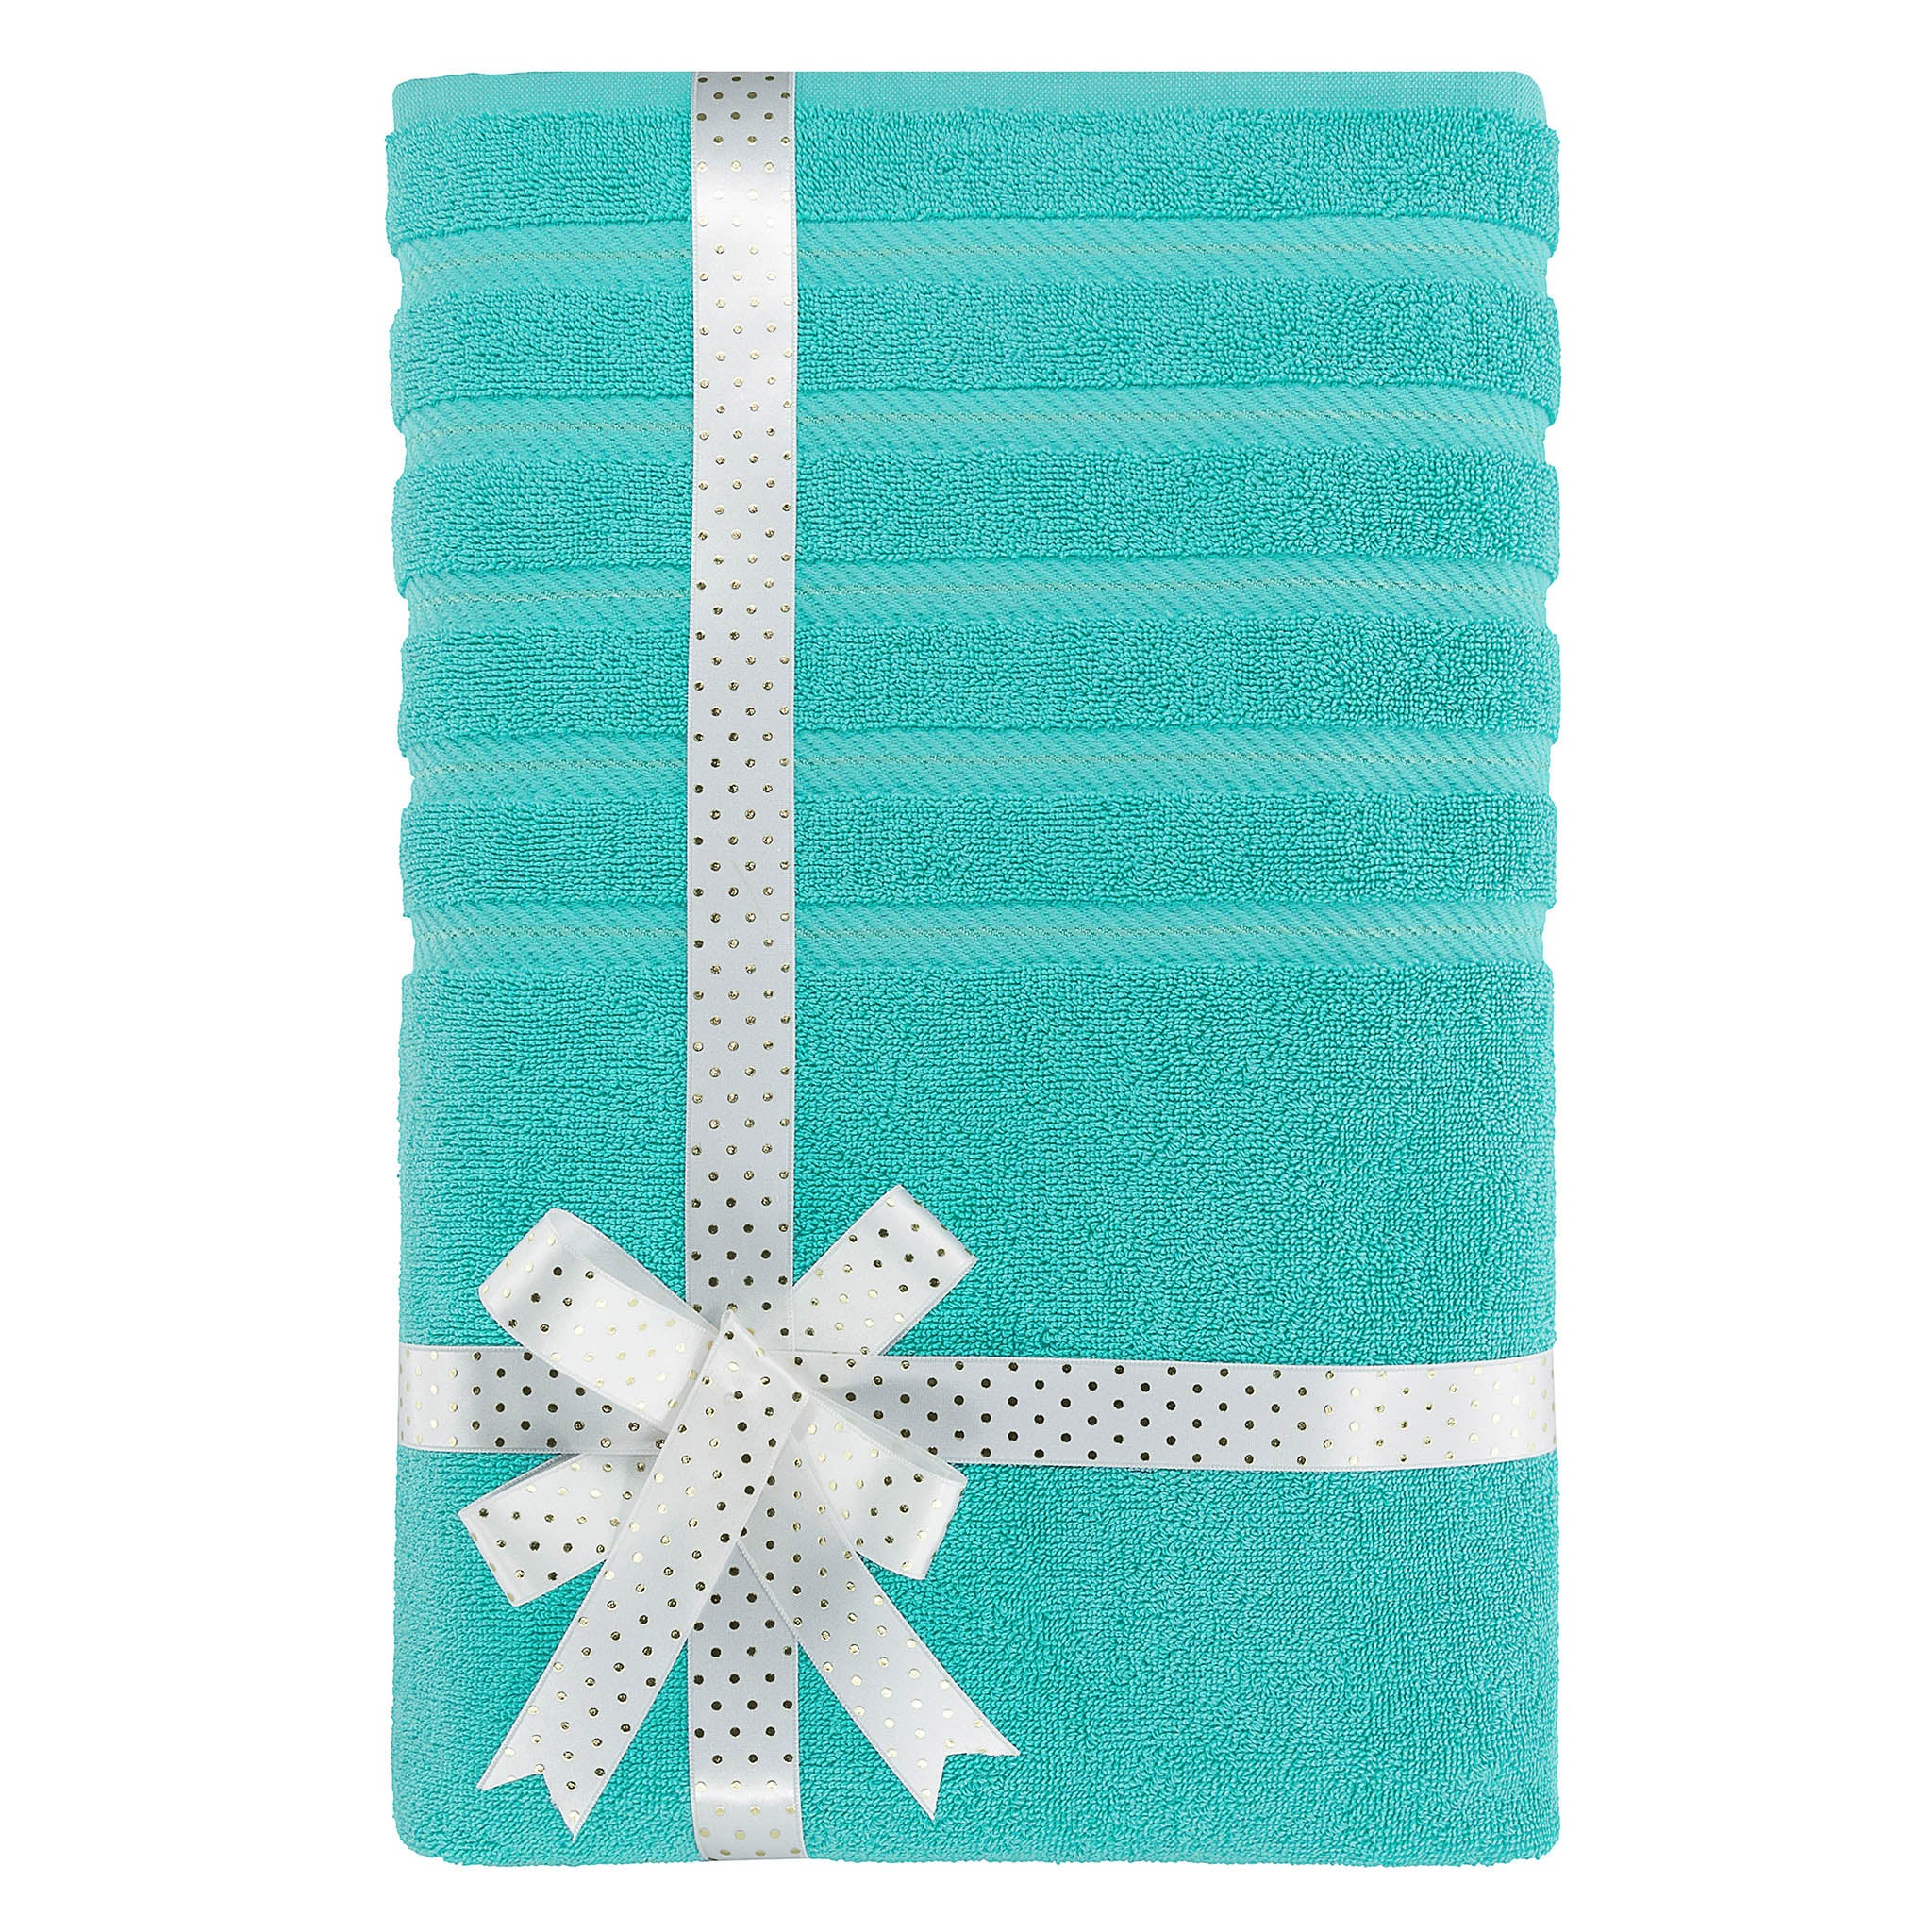 American Soft Linen Bath Sheet 35x70 inch 100% Turkish Cotton Bath Towel Sheets - Navy Blue, Size: Jumbo Bath Sheet 35x70